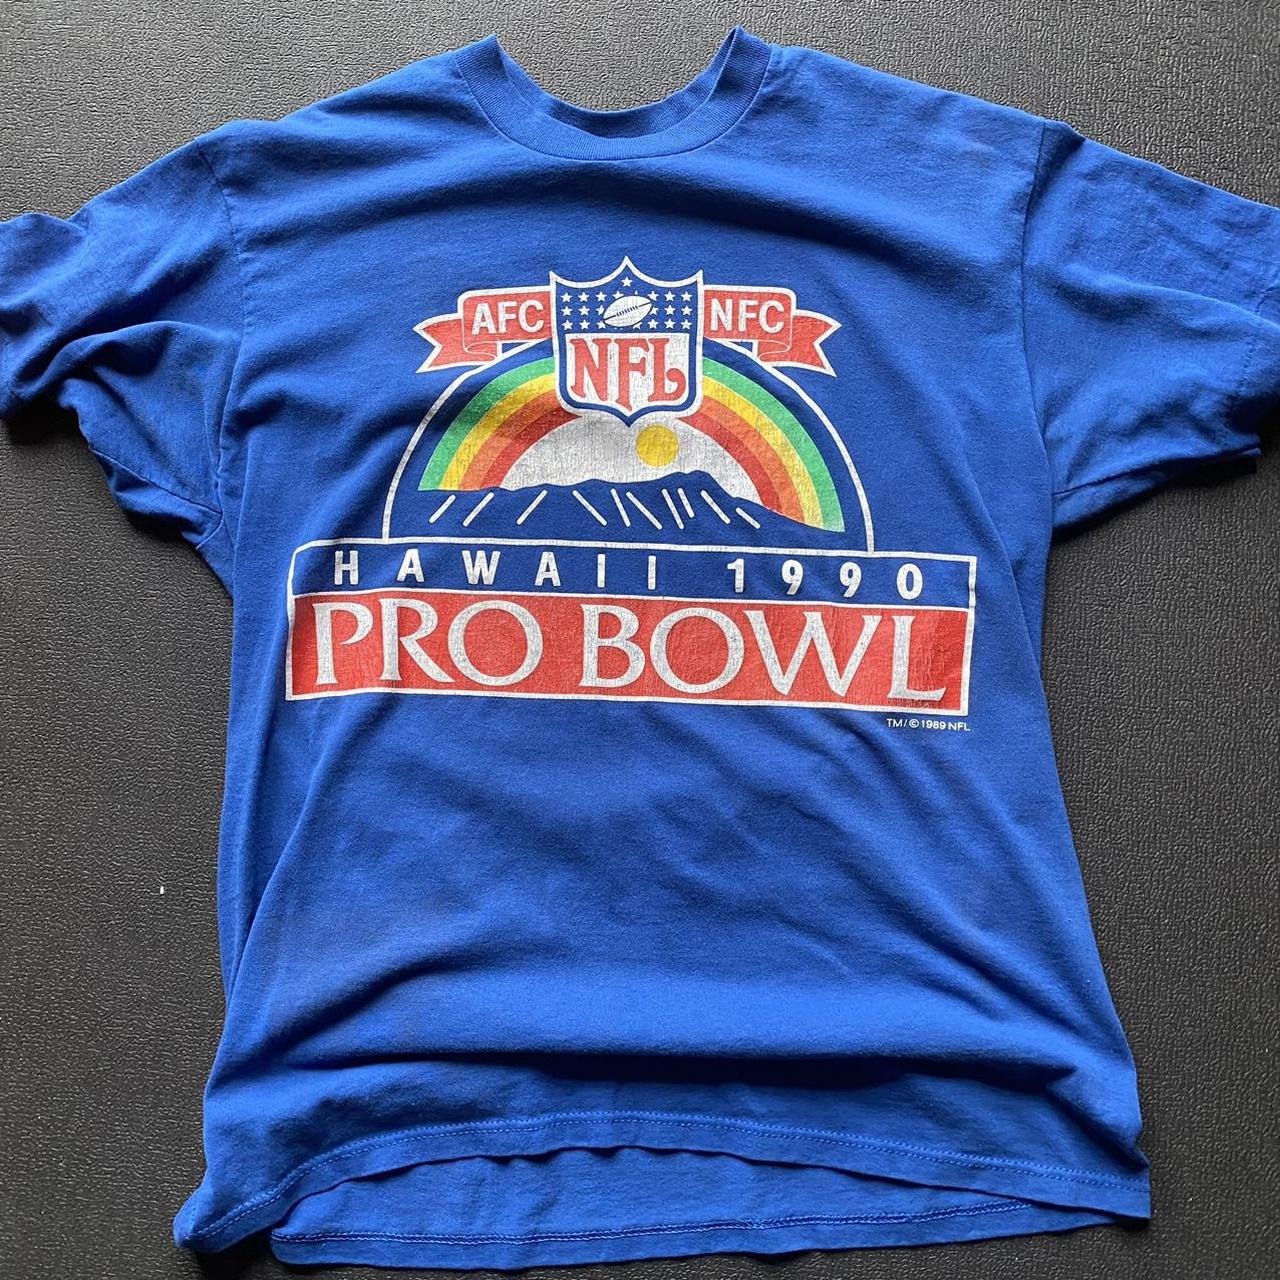 Nfl football pro bowl vintage blue Hawaii t shirt - Depop